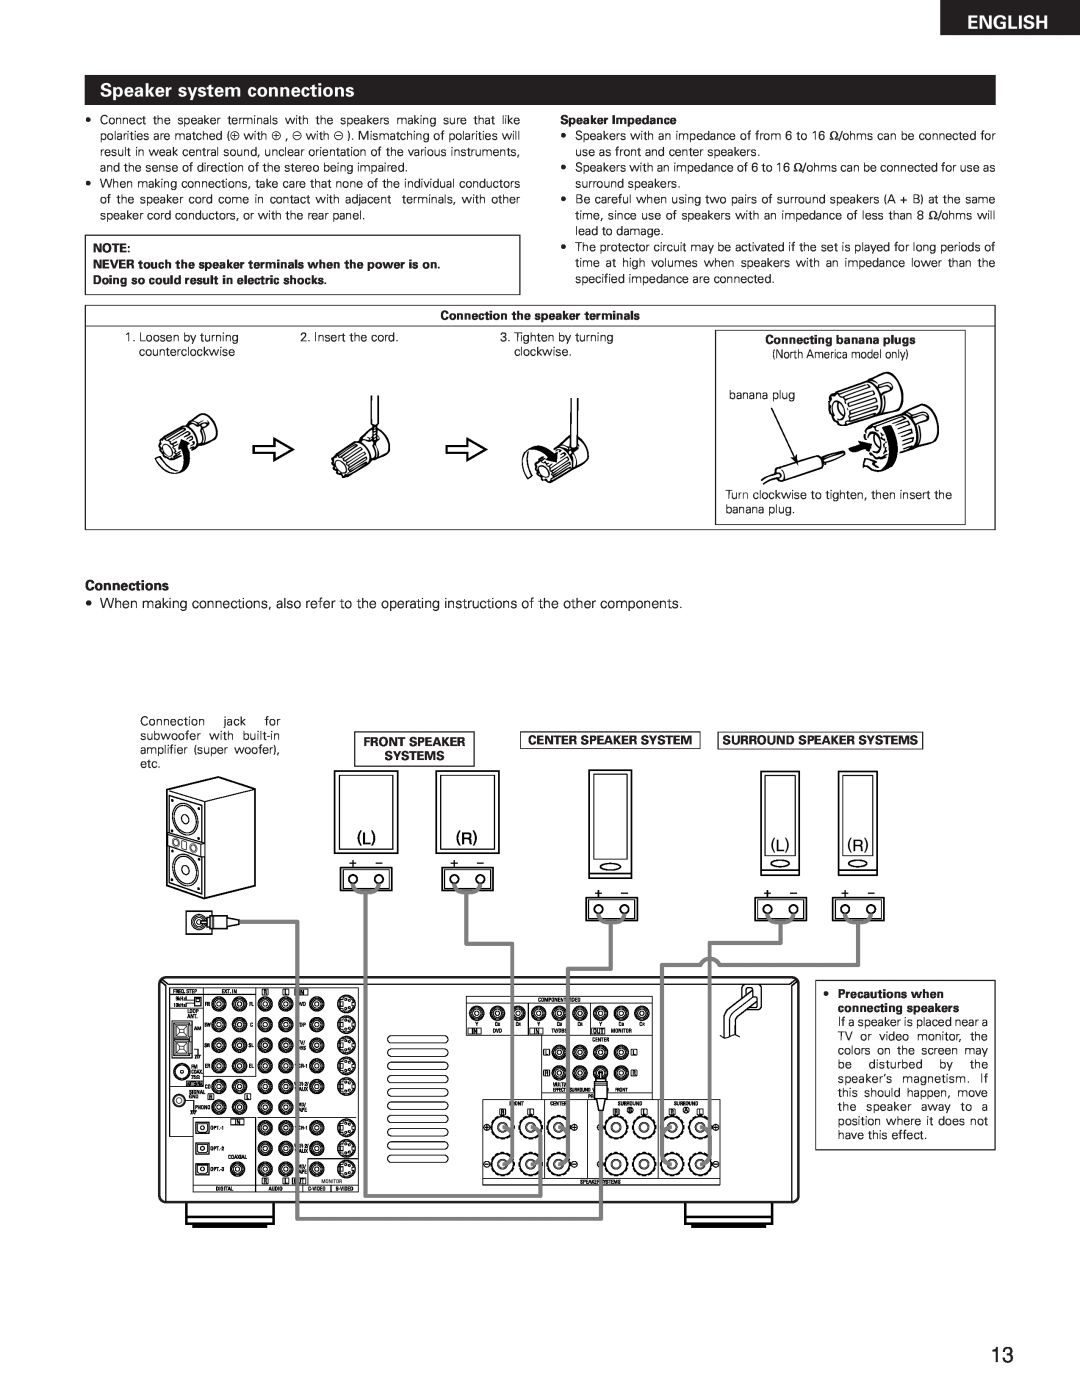 Denon AVR-3300 manual ENGLISH Speaker system connections, Connections, Speaker Impedance, Connection the speaker terminals 